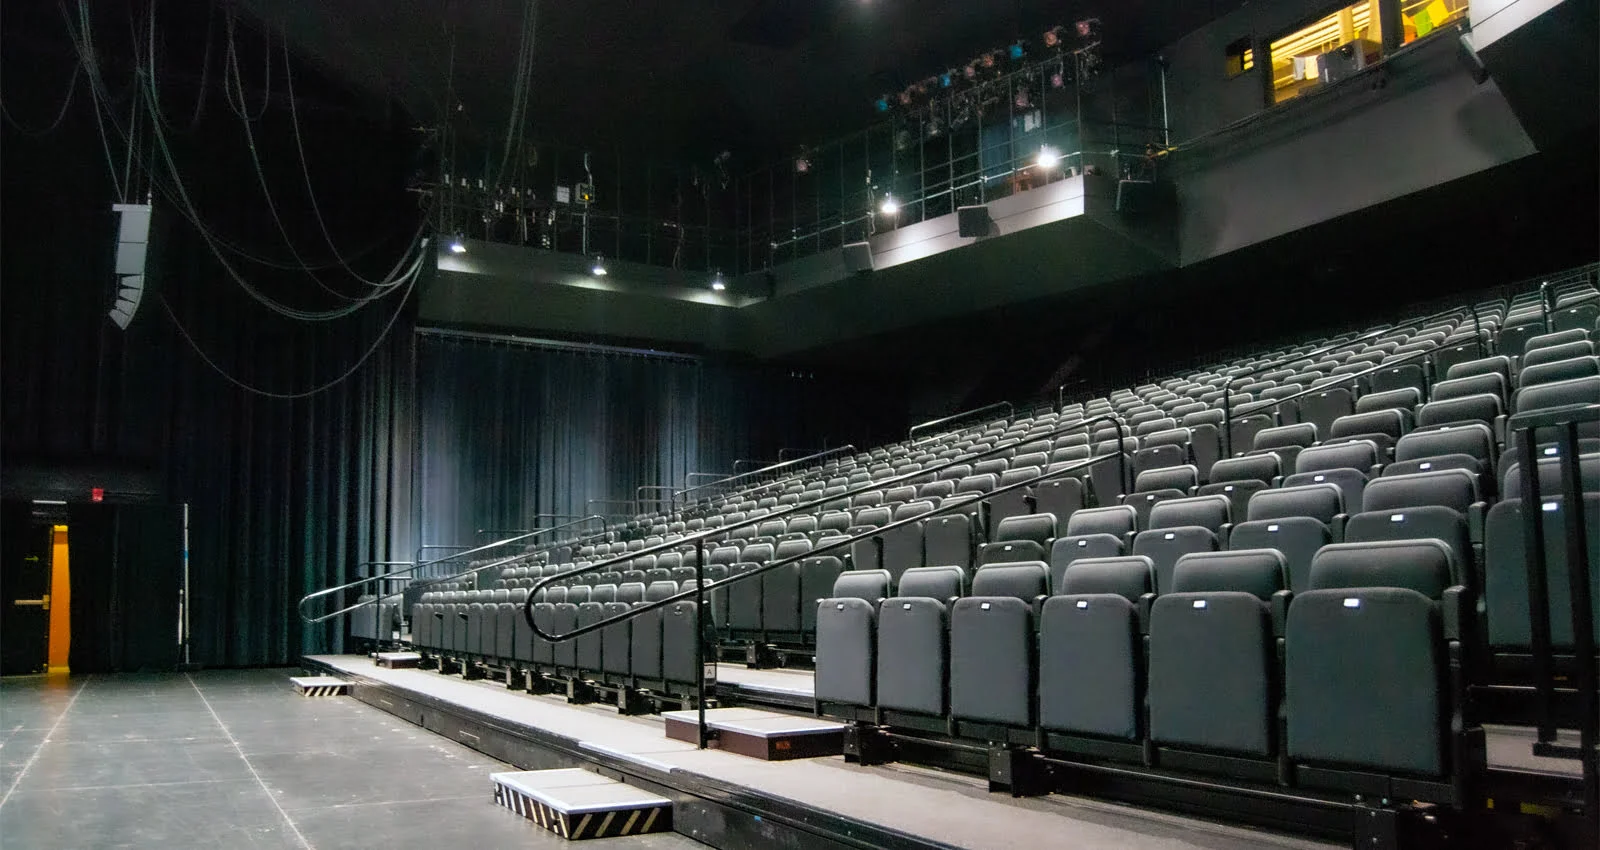 AFrey_Capital-Saratoga Region - Proctors Theatre, 434-seat GE Theatre